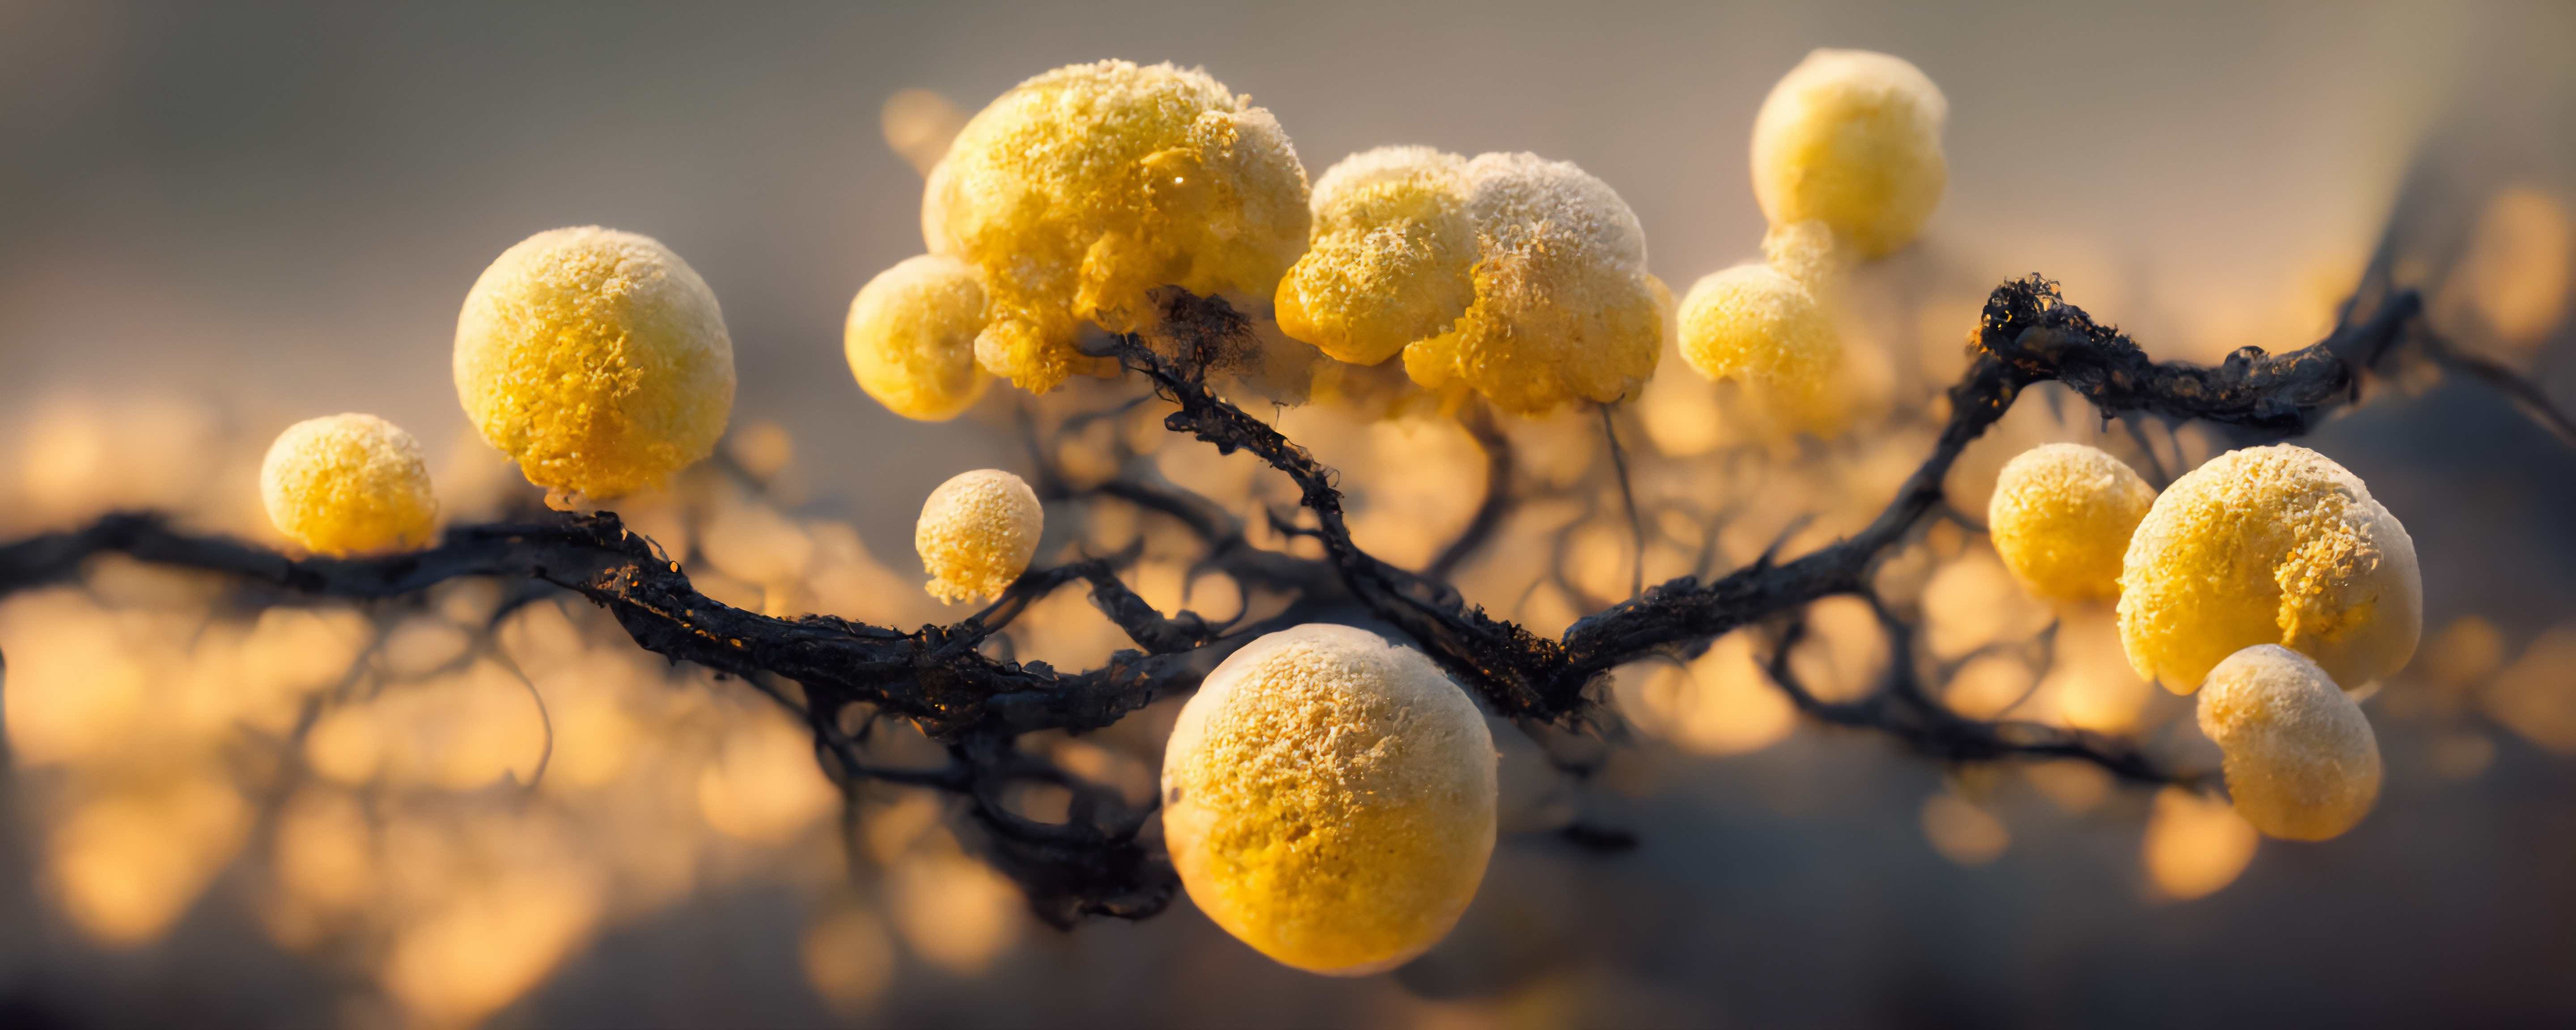 Candida auris est un champignon pathogène. © catalin, Adobe stock